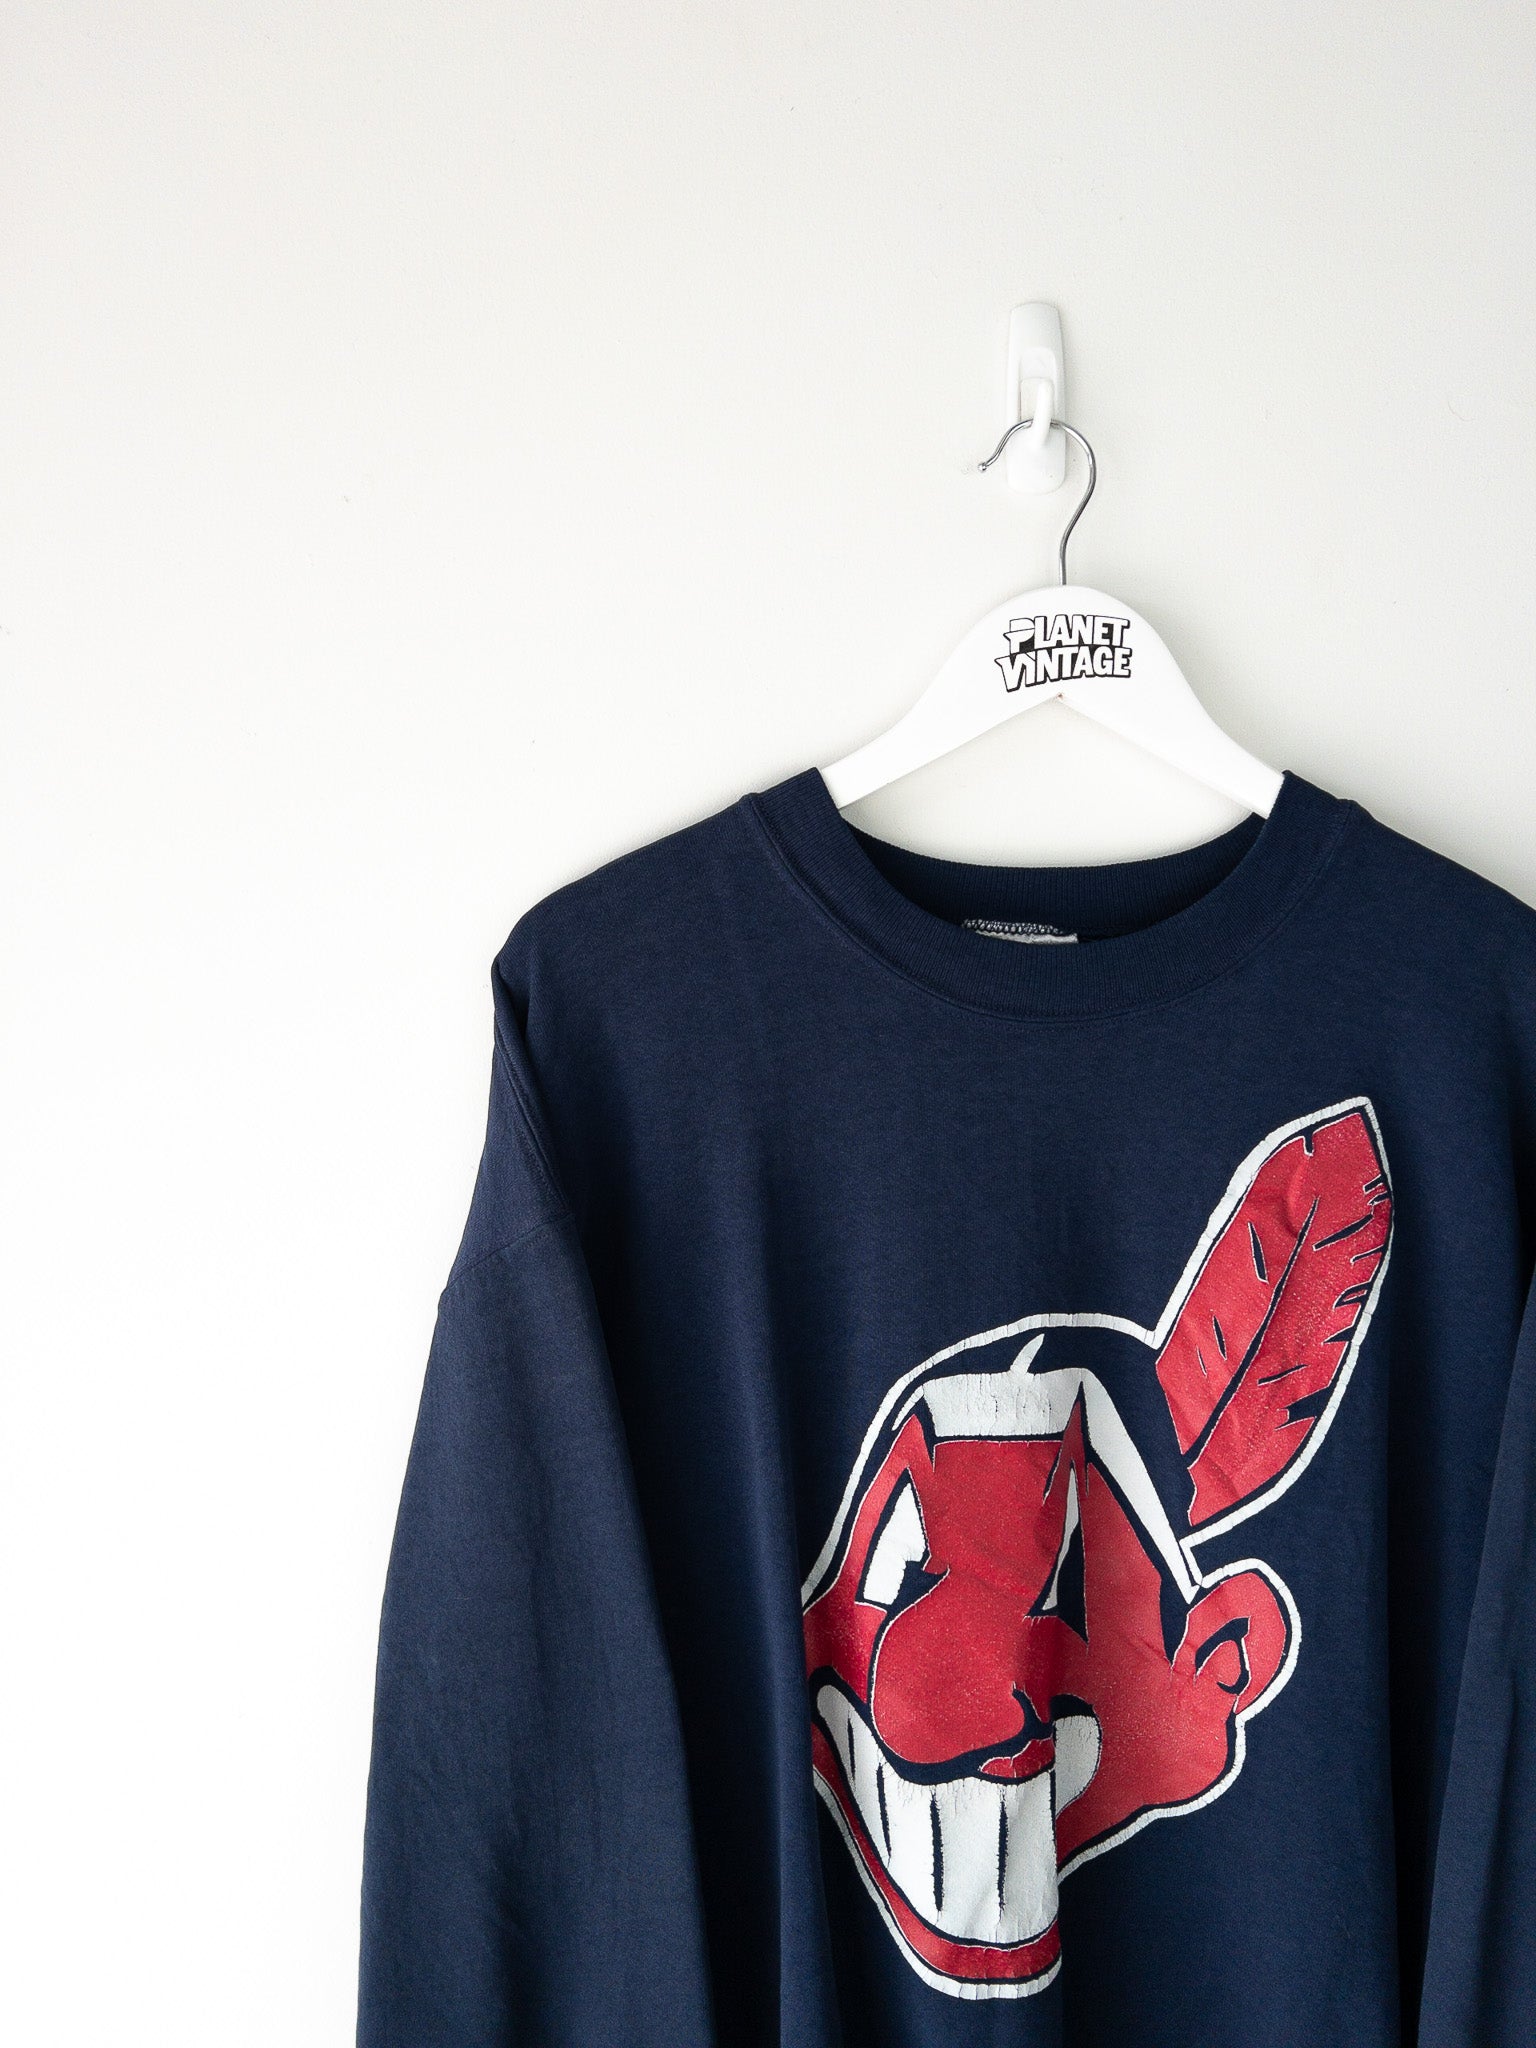 Vintage Cleveland Indians Sweatshirt (L)